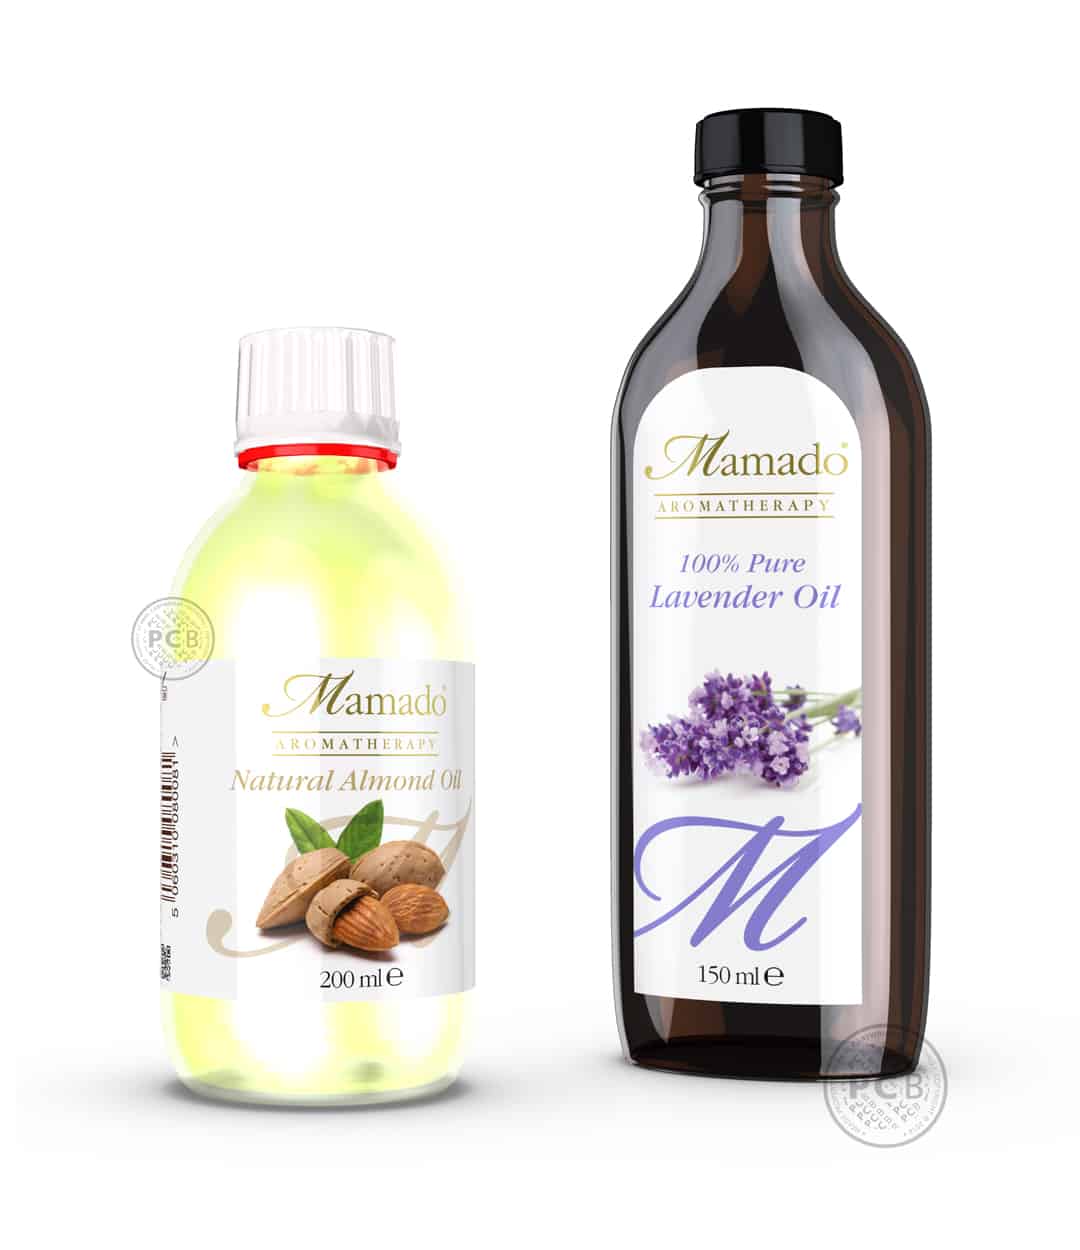 Mamado Aromatherapy essential oils label graphics design visuals by Paul Cartwright Branding.